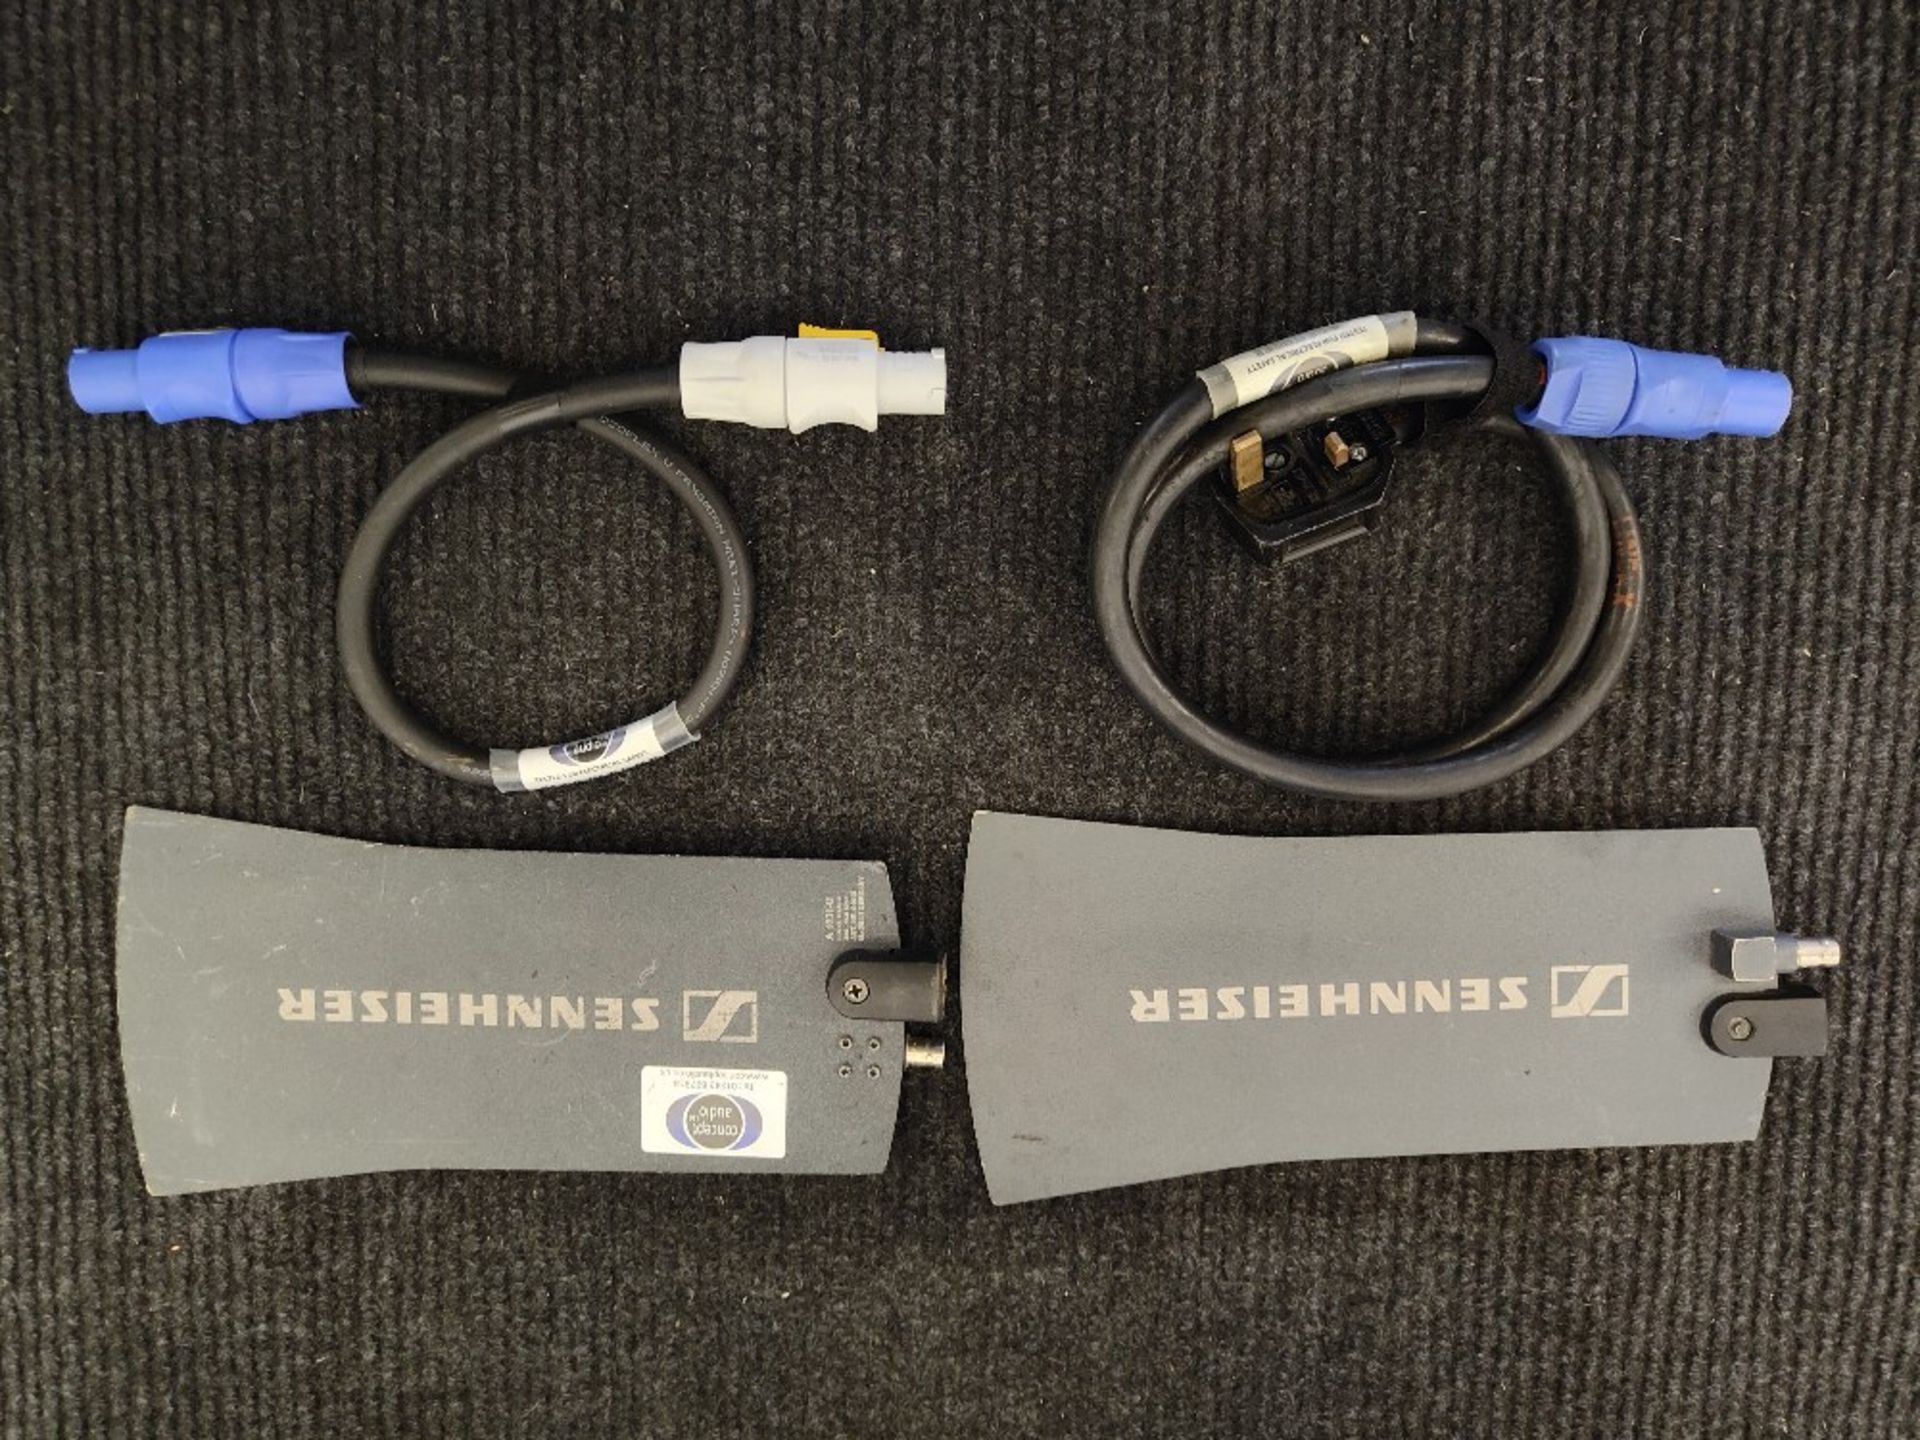 Sennheiser Receiver Rack - To Include: (4) EW100 G3 Receivers, (2) Antennas - Image 4 of 5